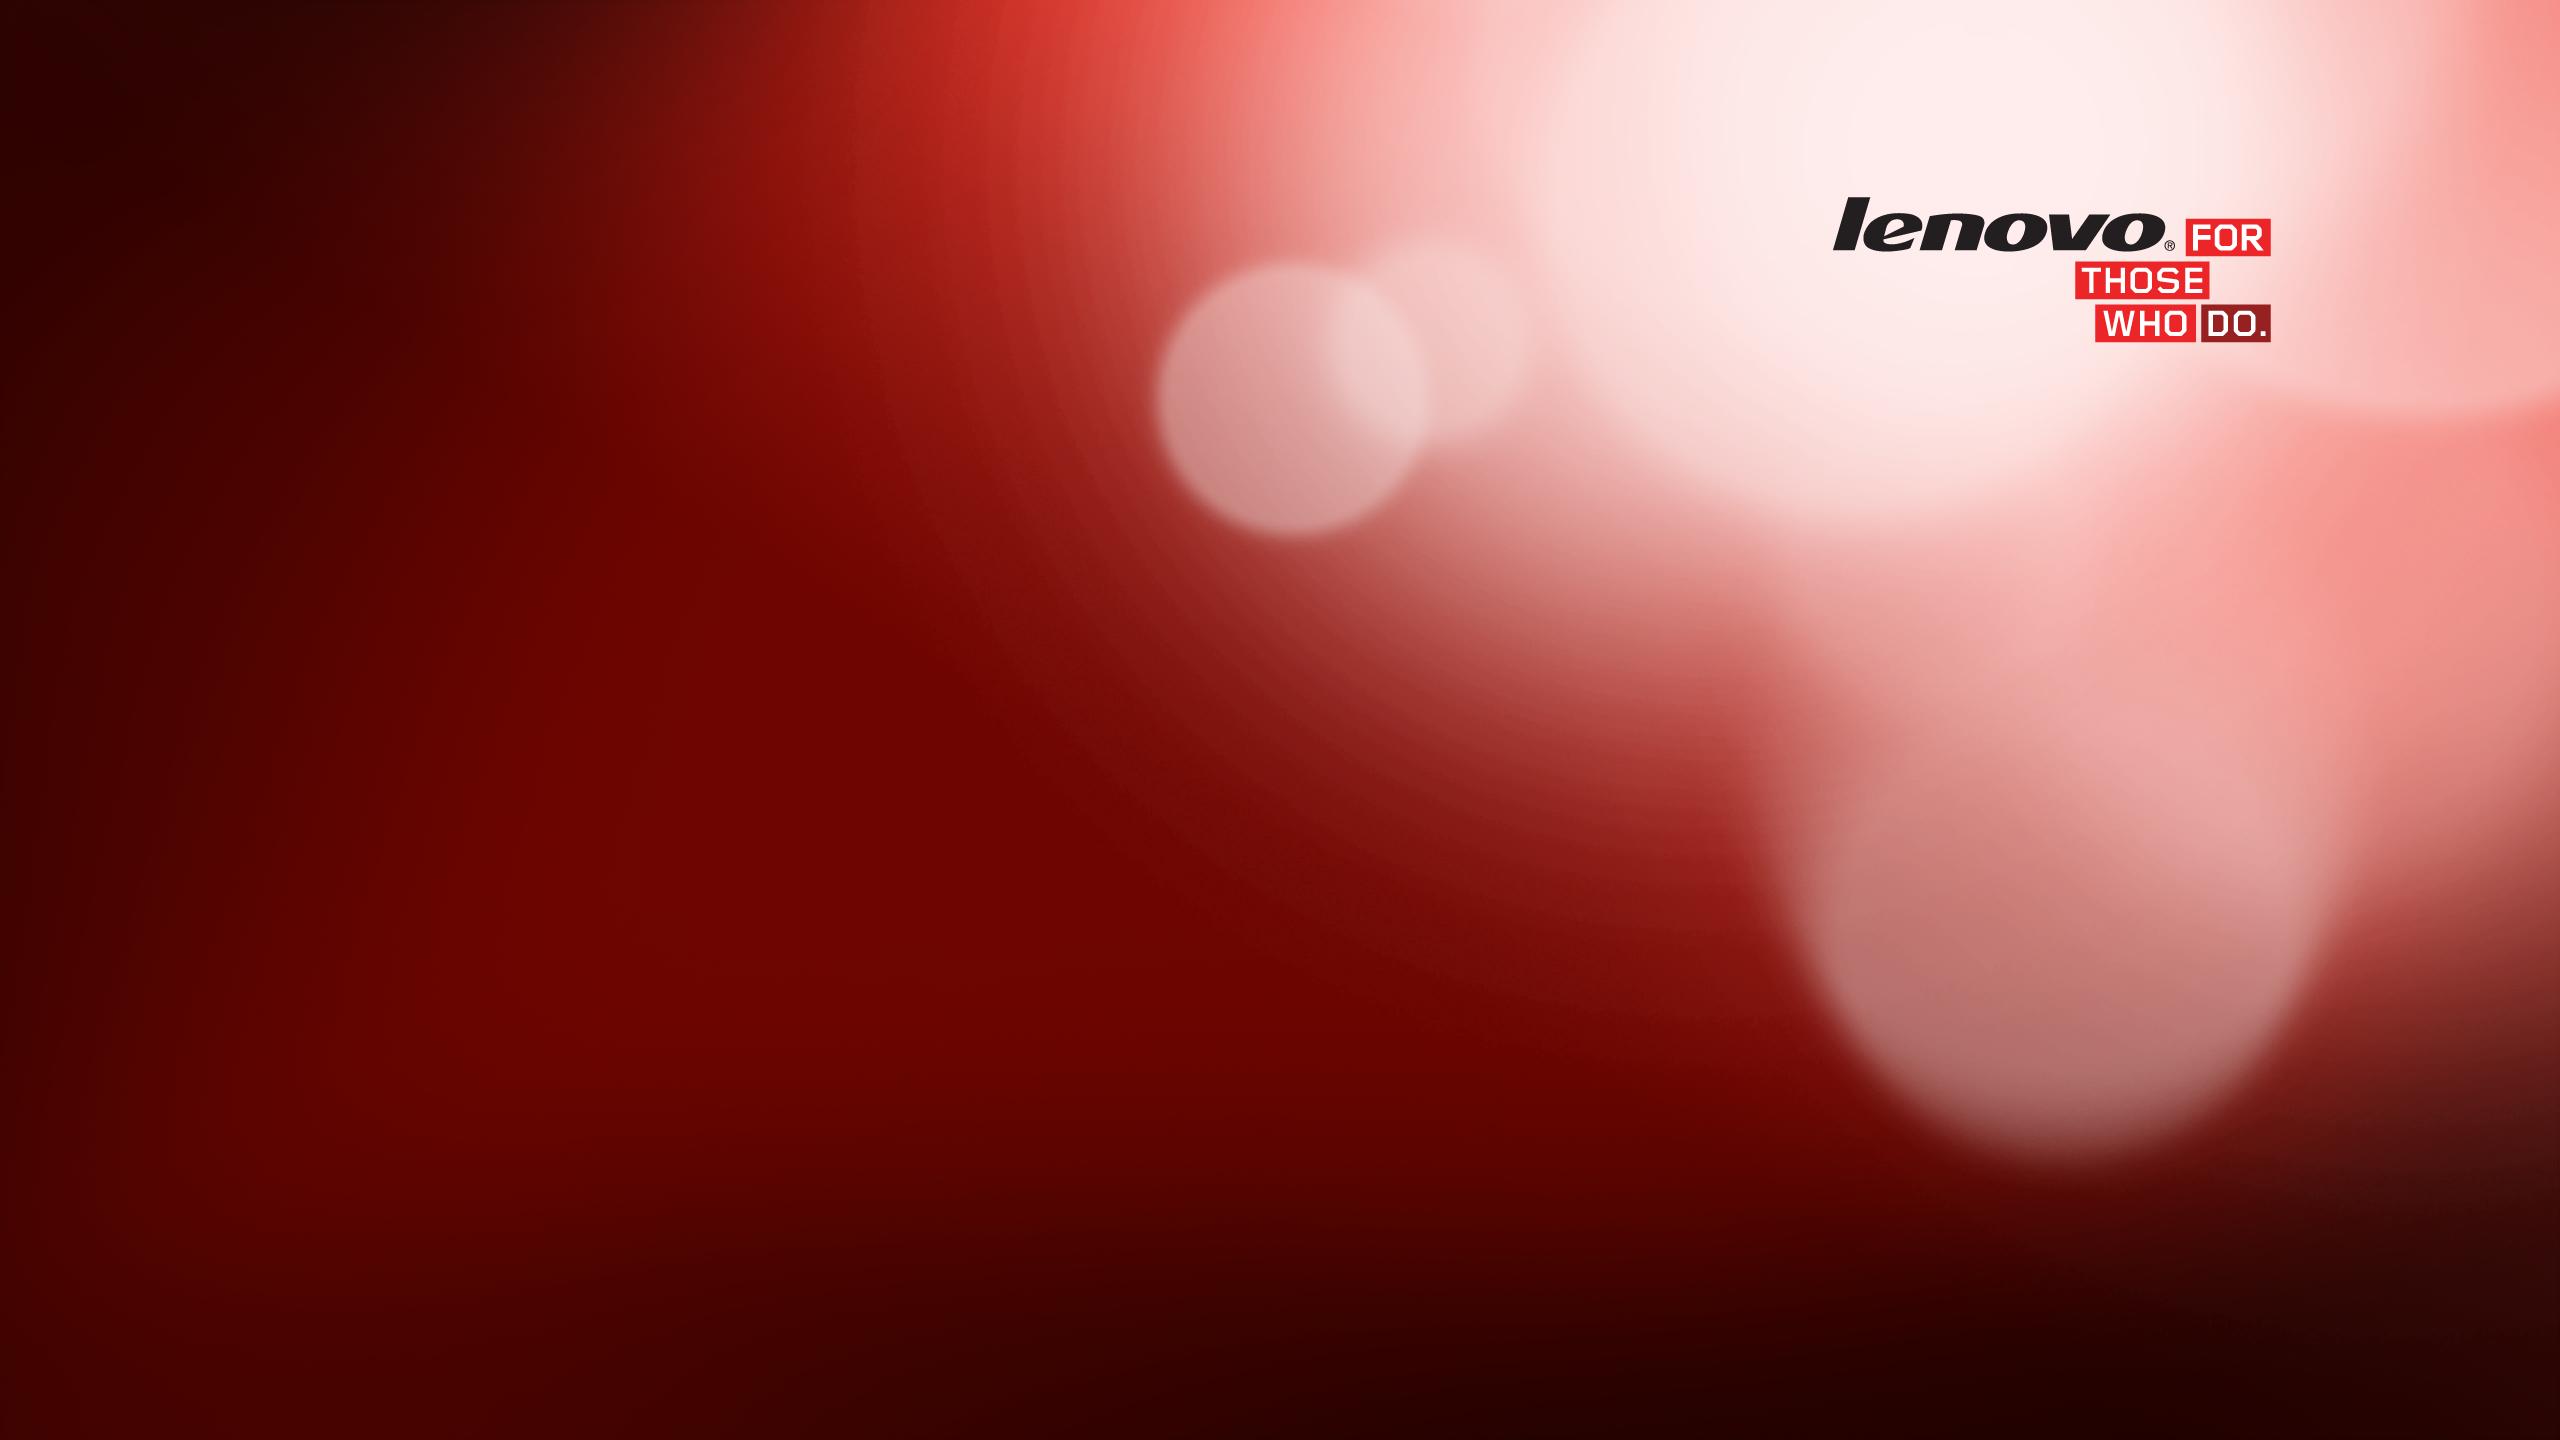 Lenovo Wallpaper High Quality